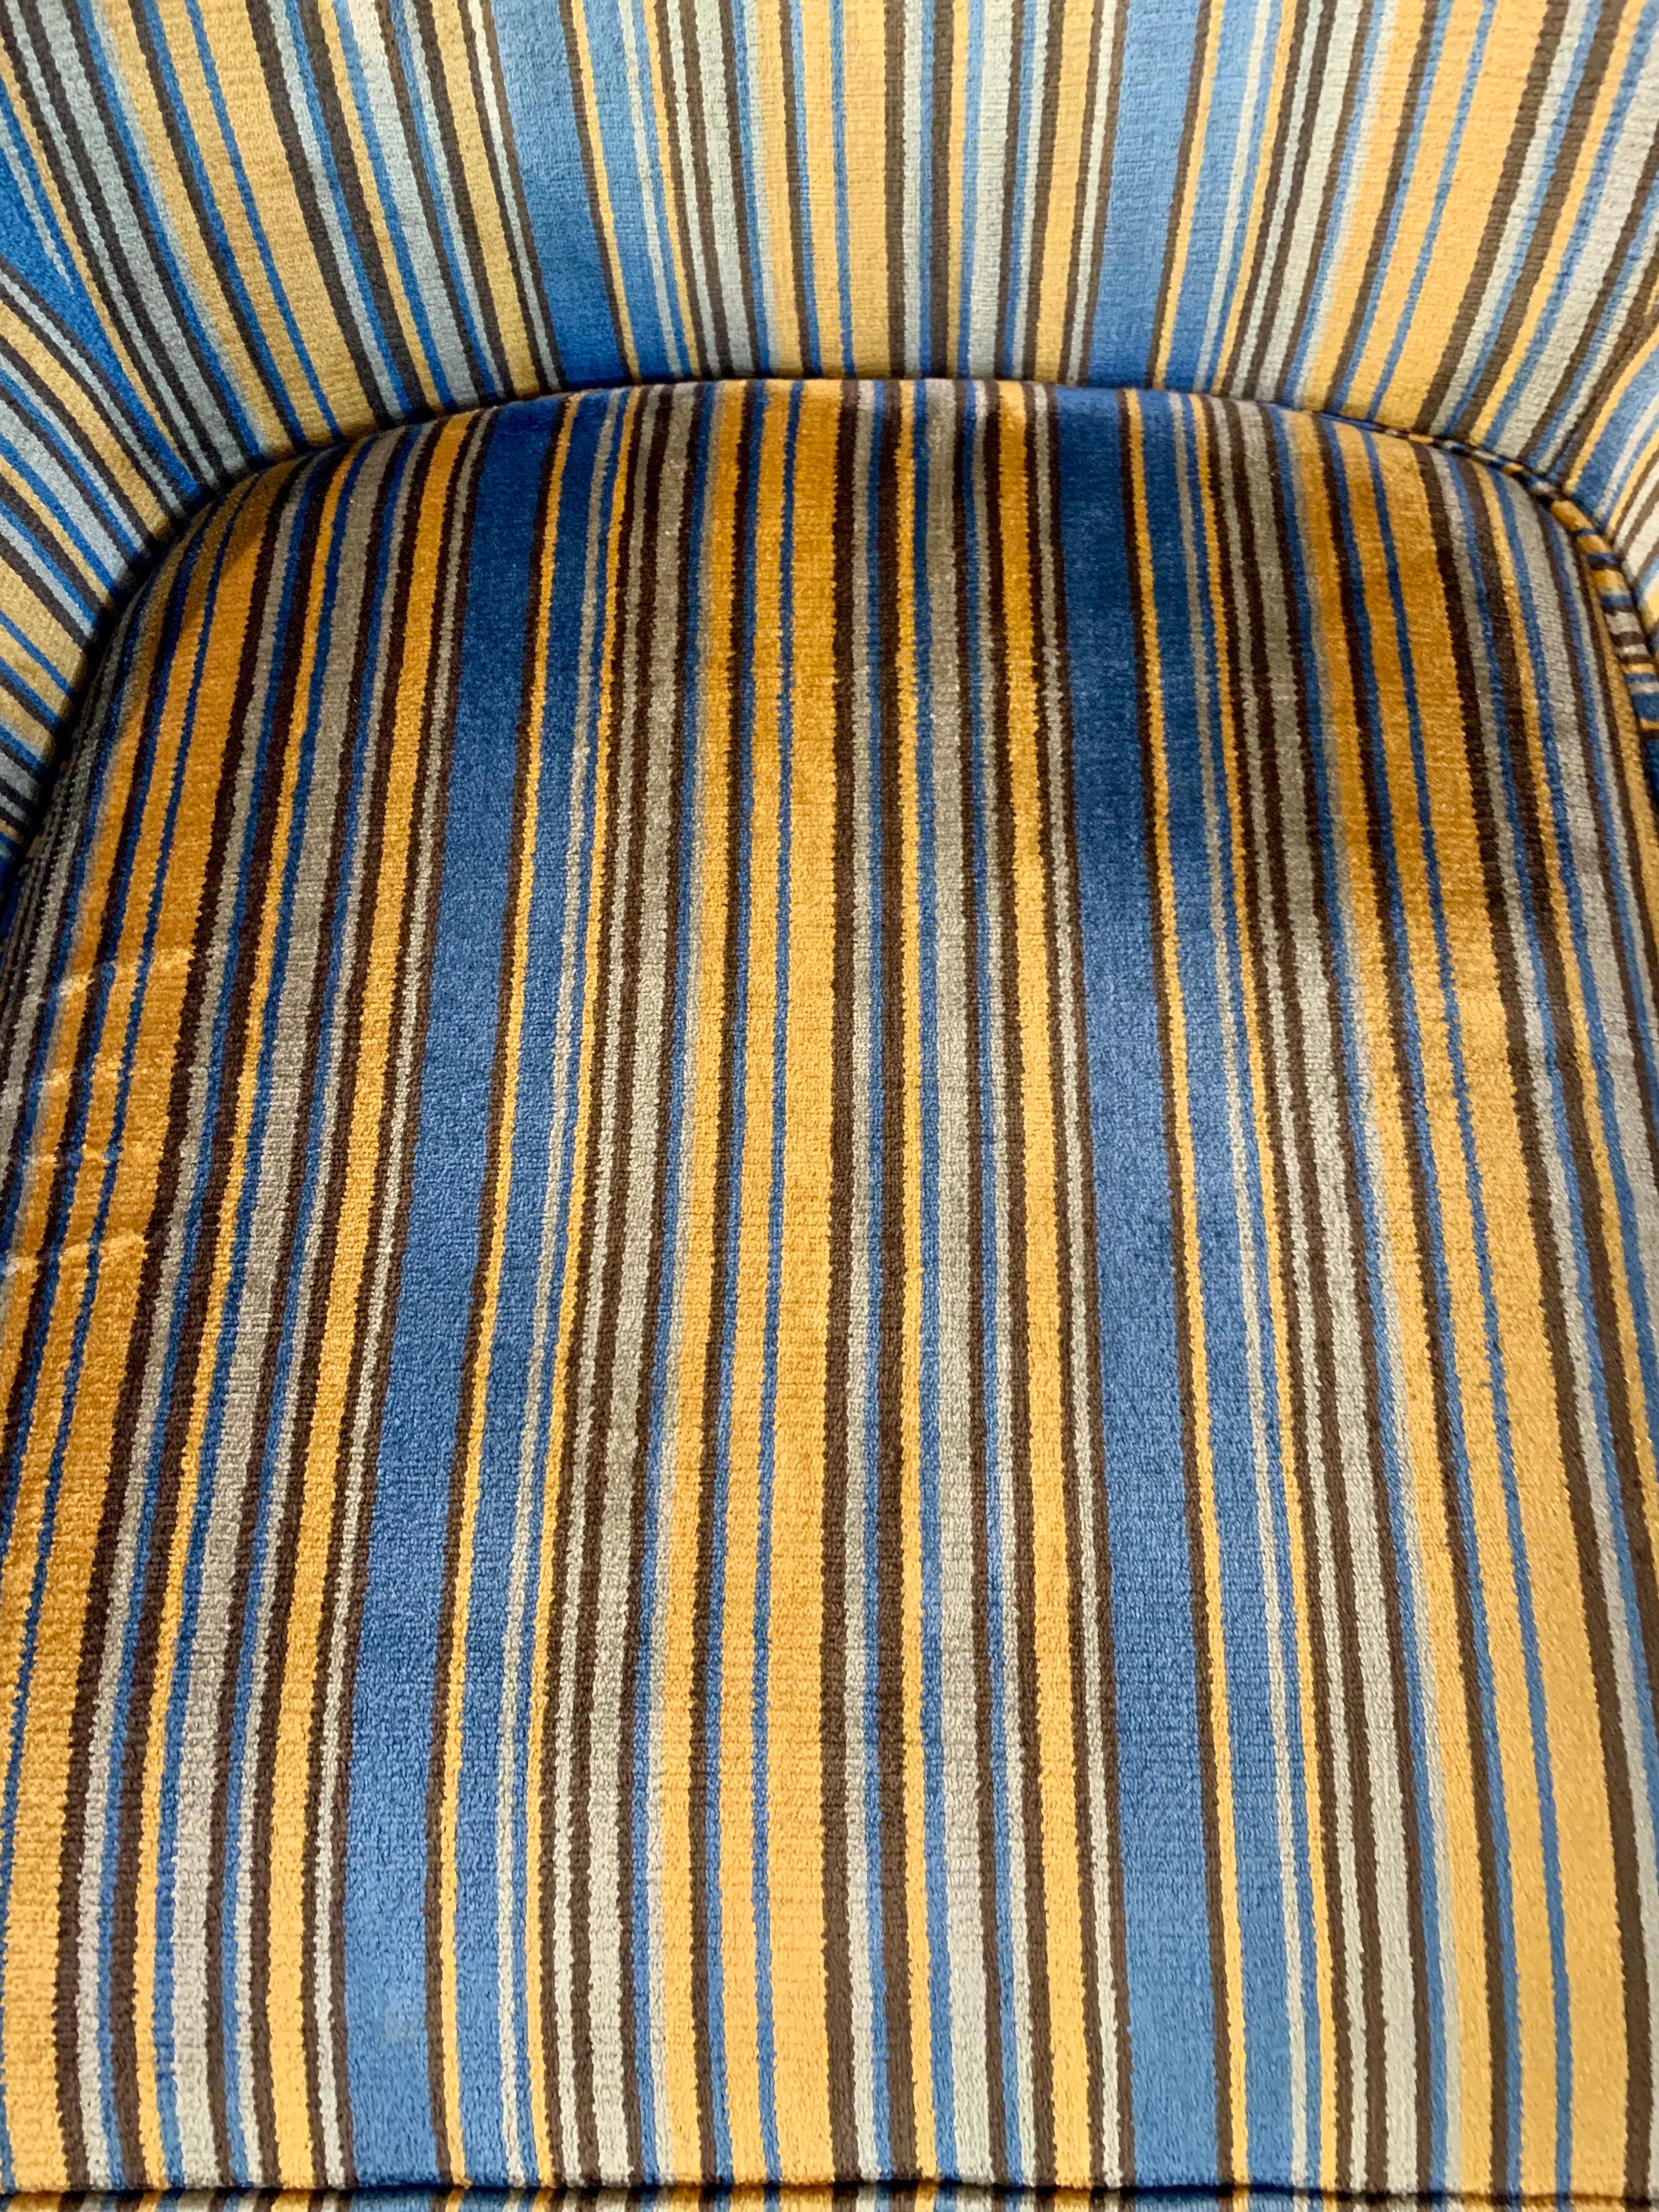 Mid-20th Century Mid-Century Modern Upholstered Lounge Chair Jack Lenor Larsen Fabric